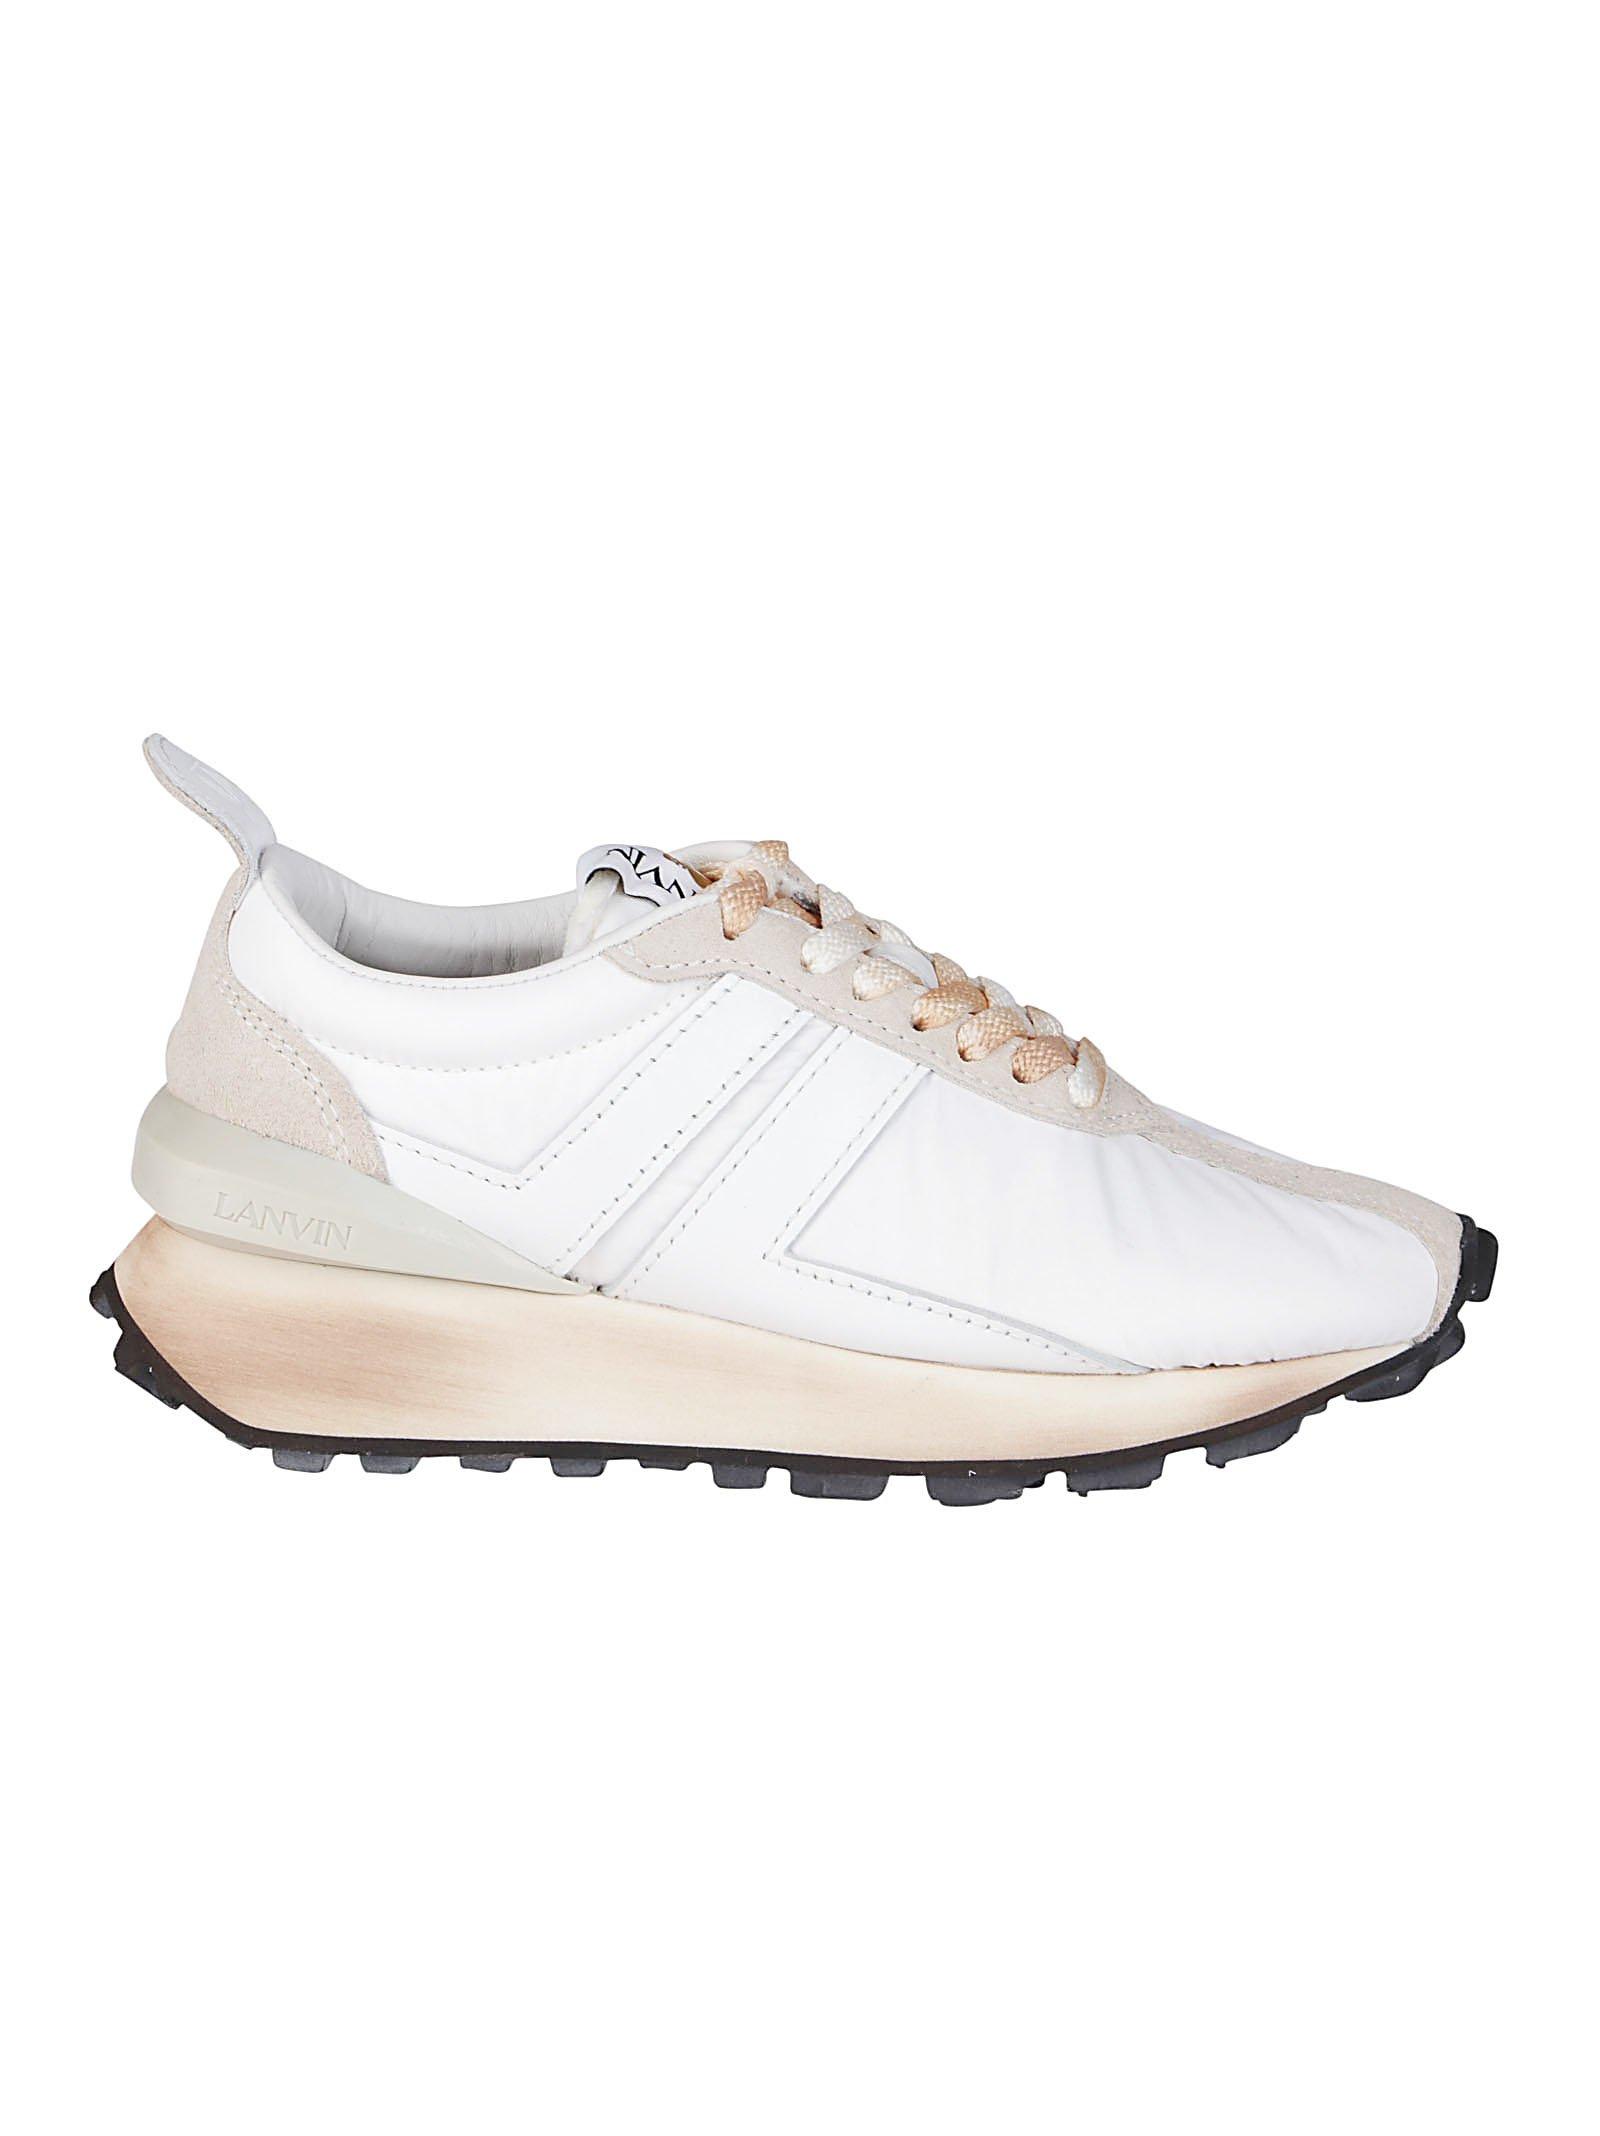 Lanvin Synthetic Bumper Sneakers in White - Lyst